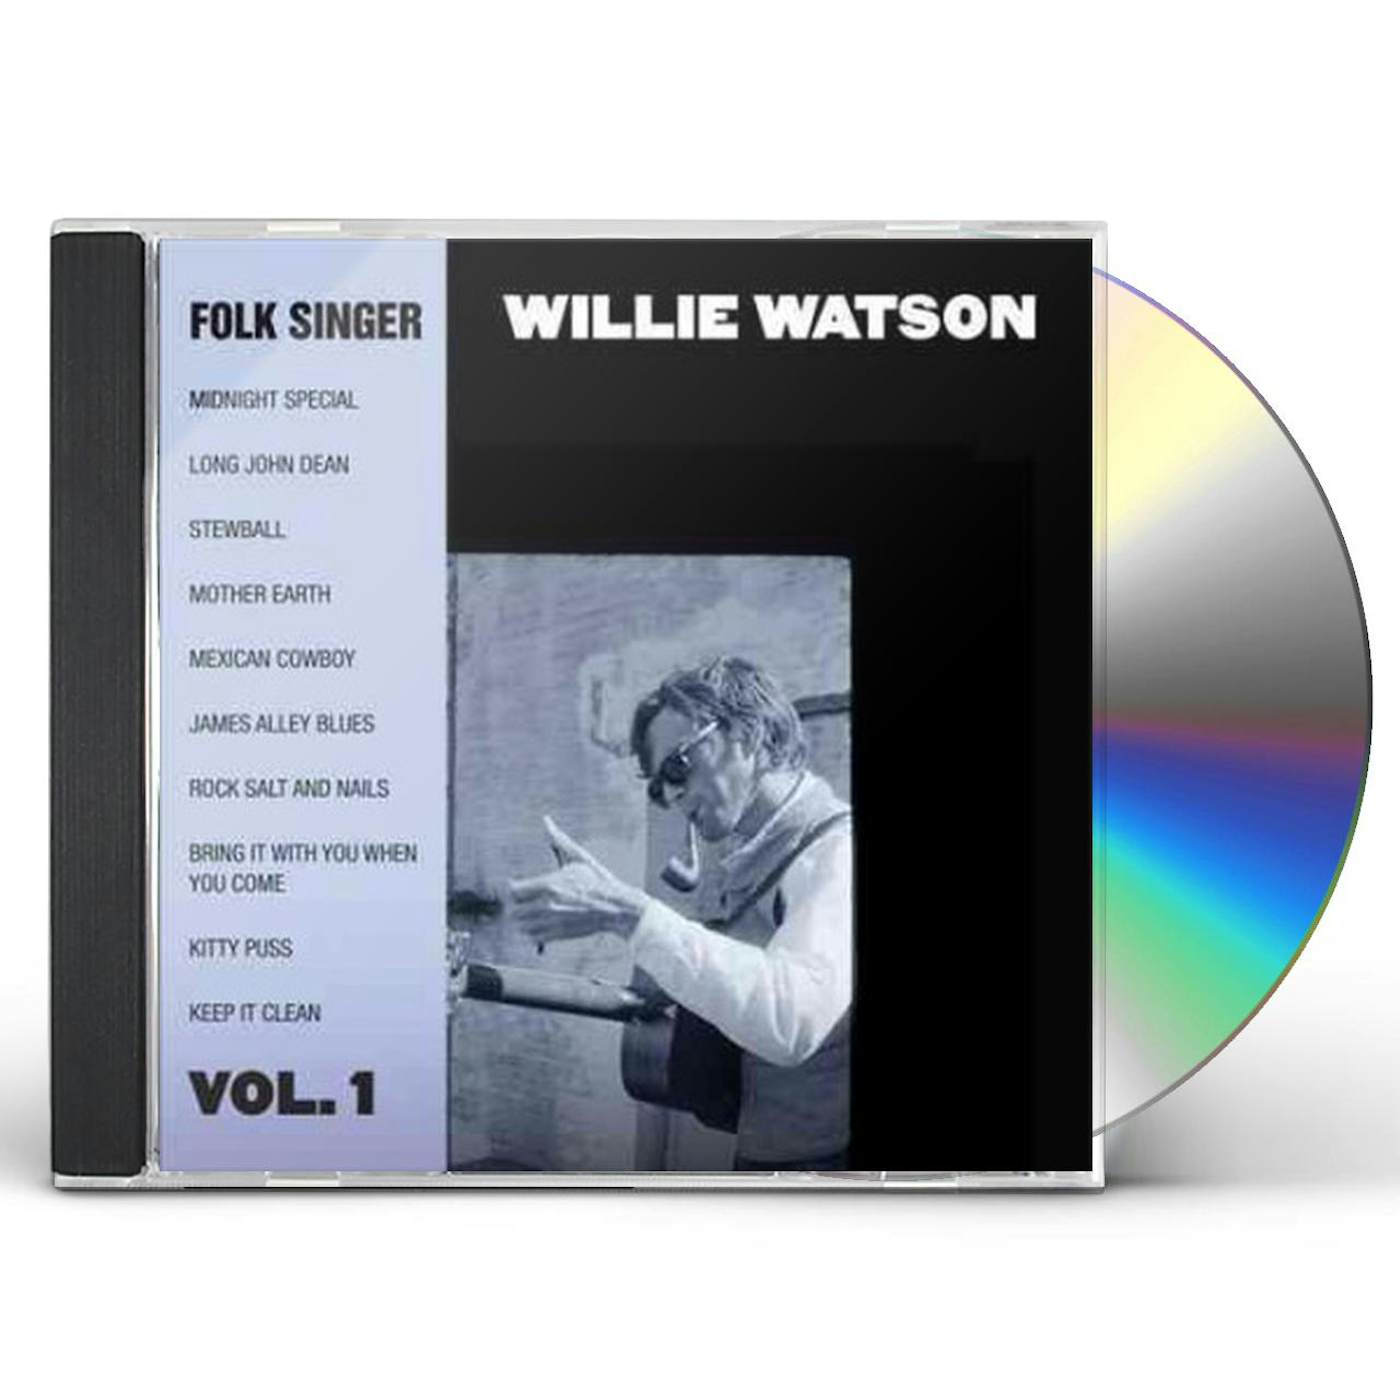 Willie Watson FOLK SINGER 1 CD